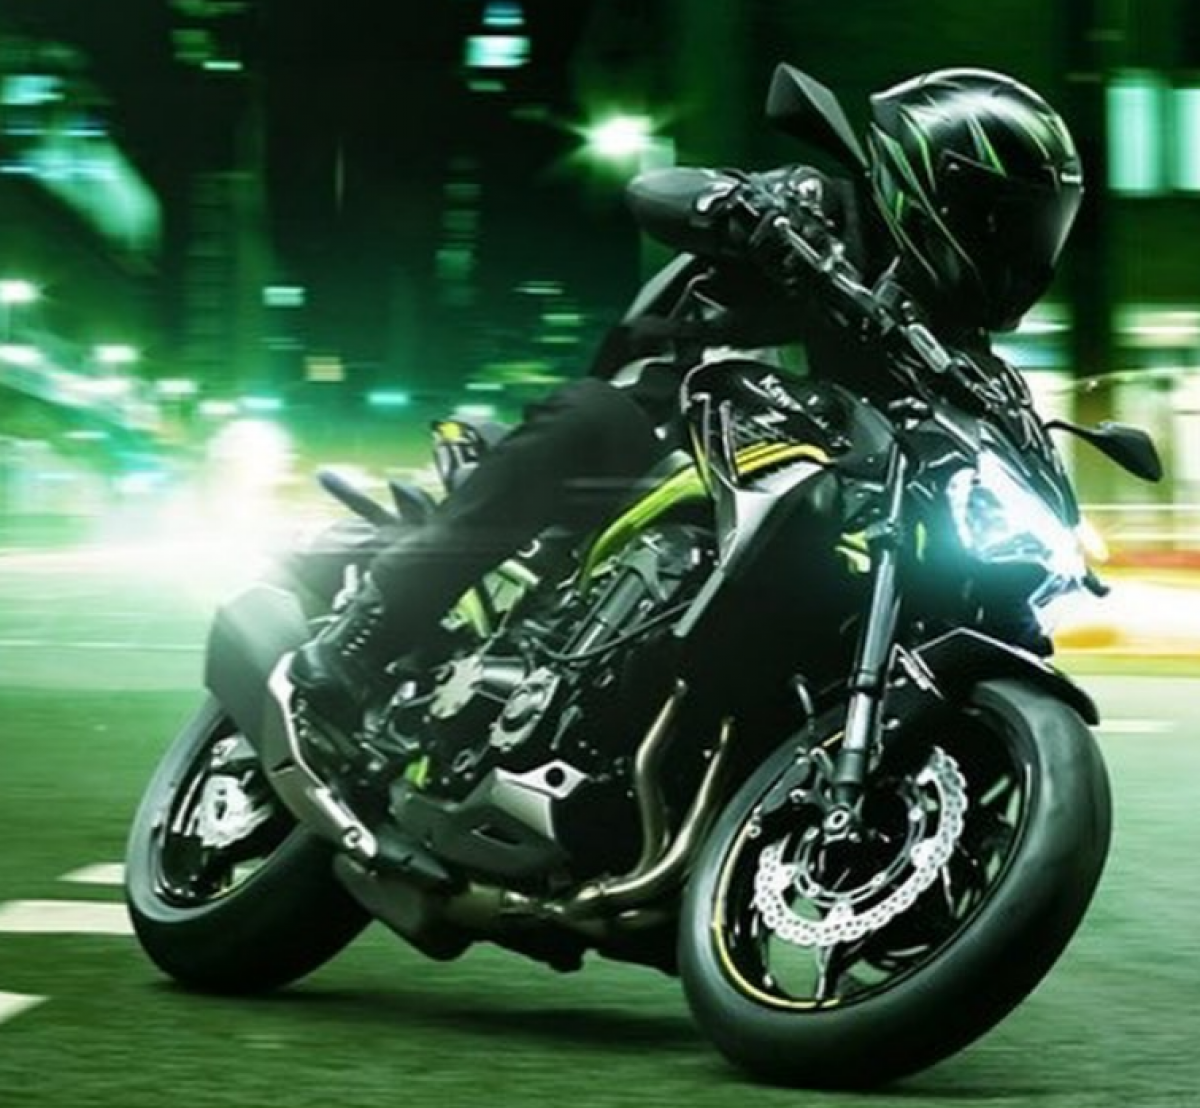 Technology-packed 2020 Kawasaki Z900 revealed